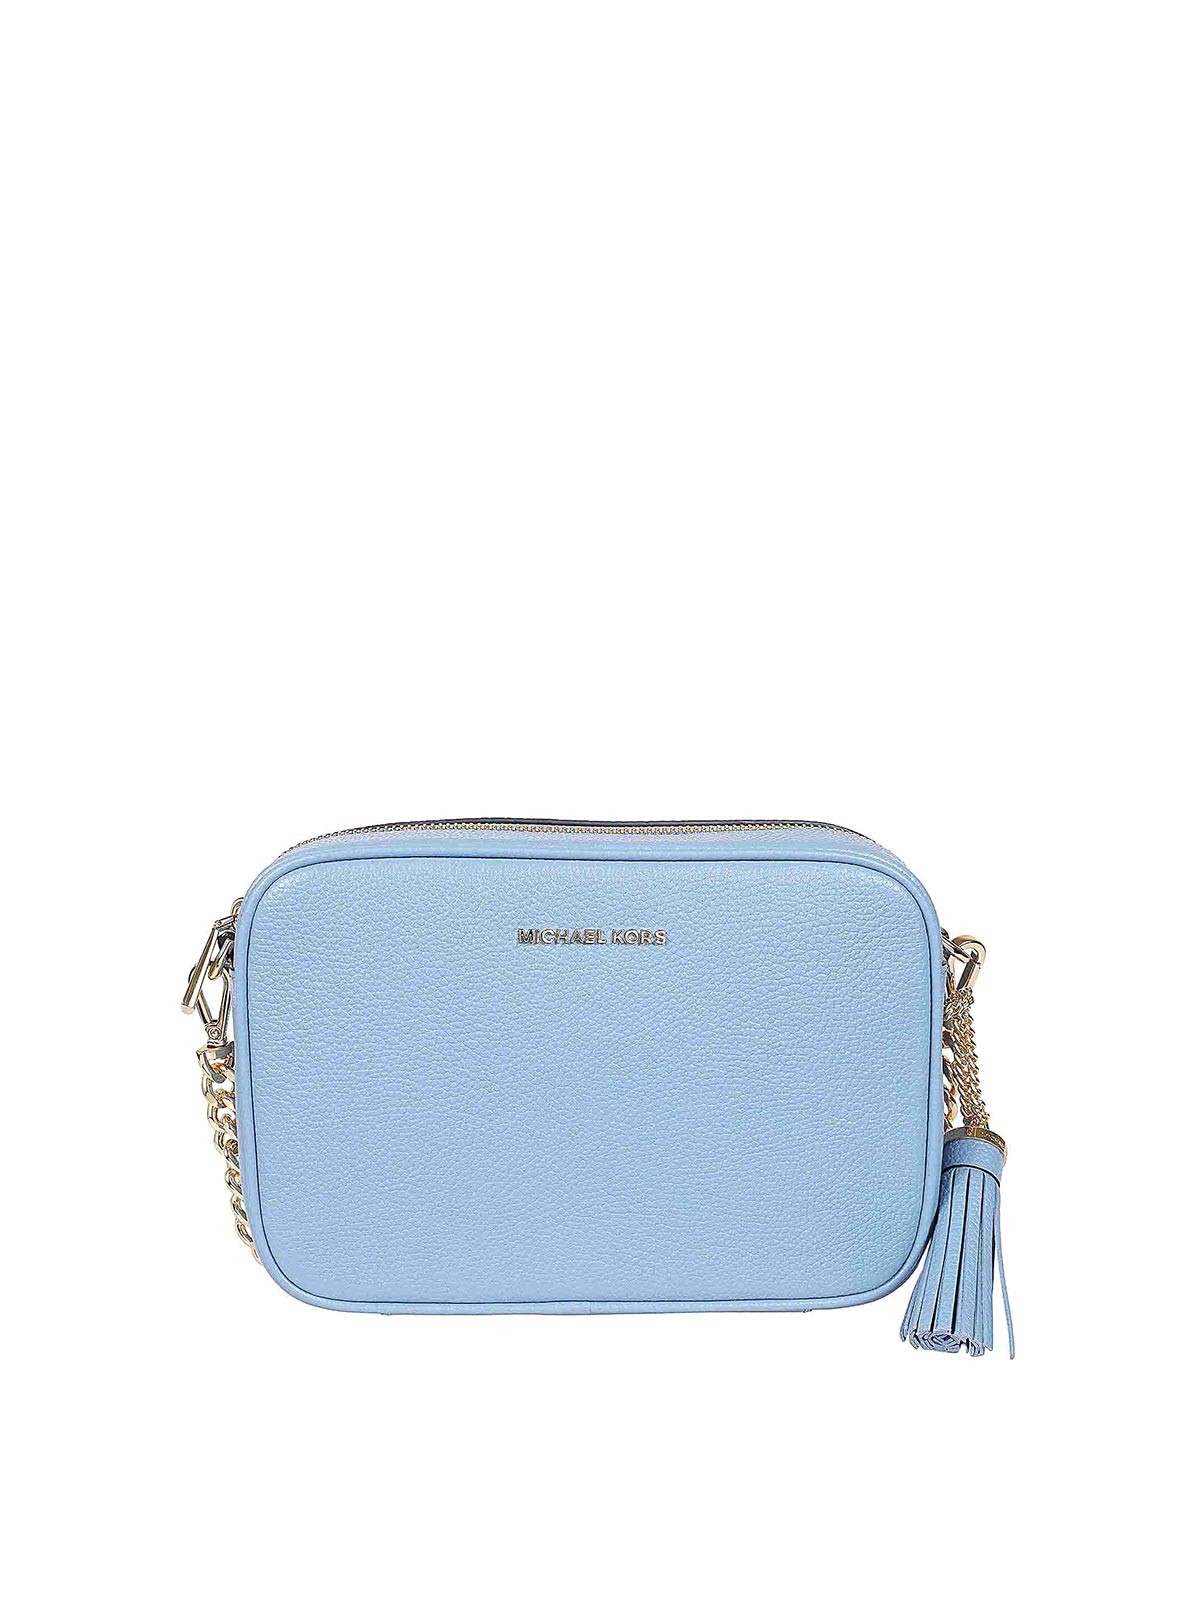 Shop Michael Kors Blue Leather Bag